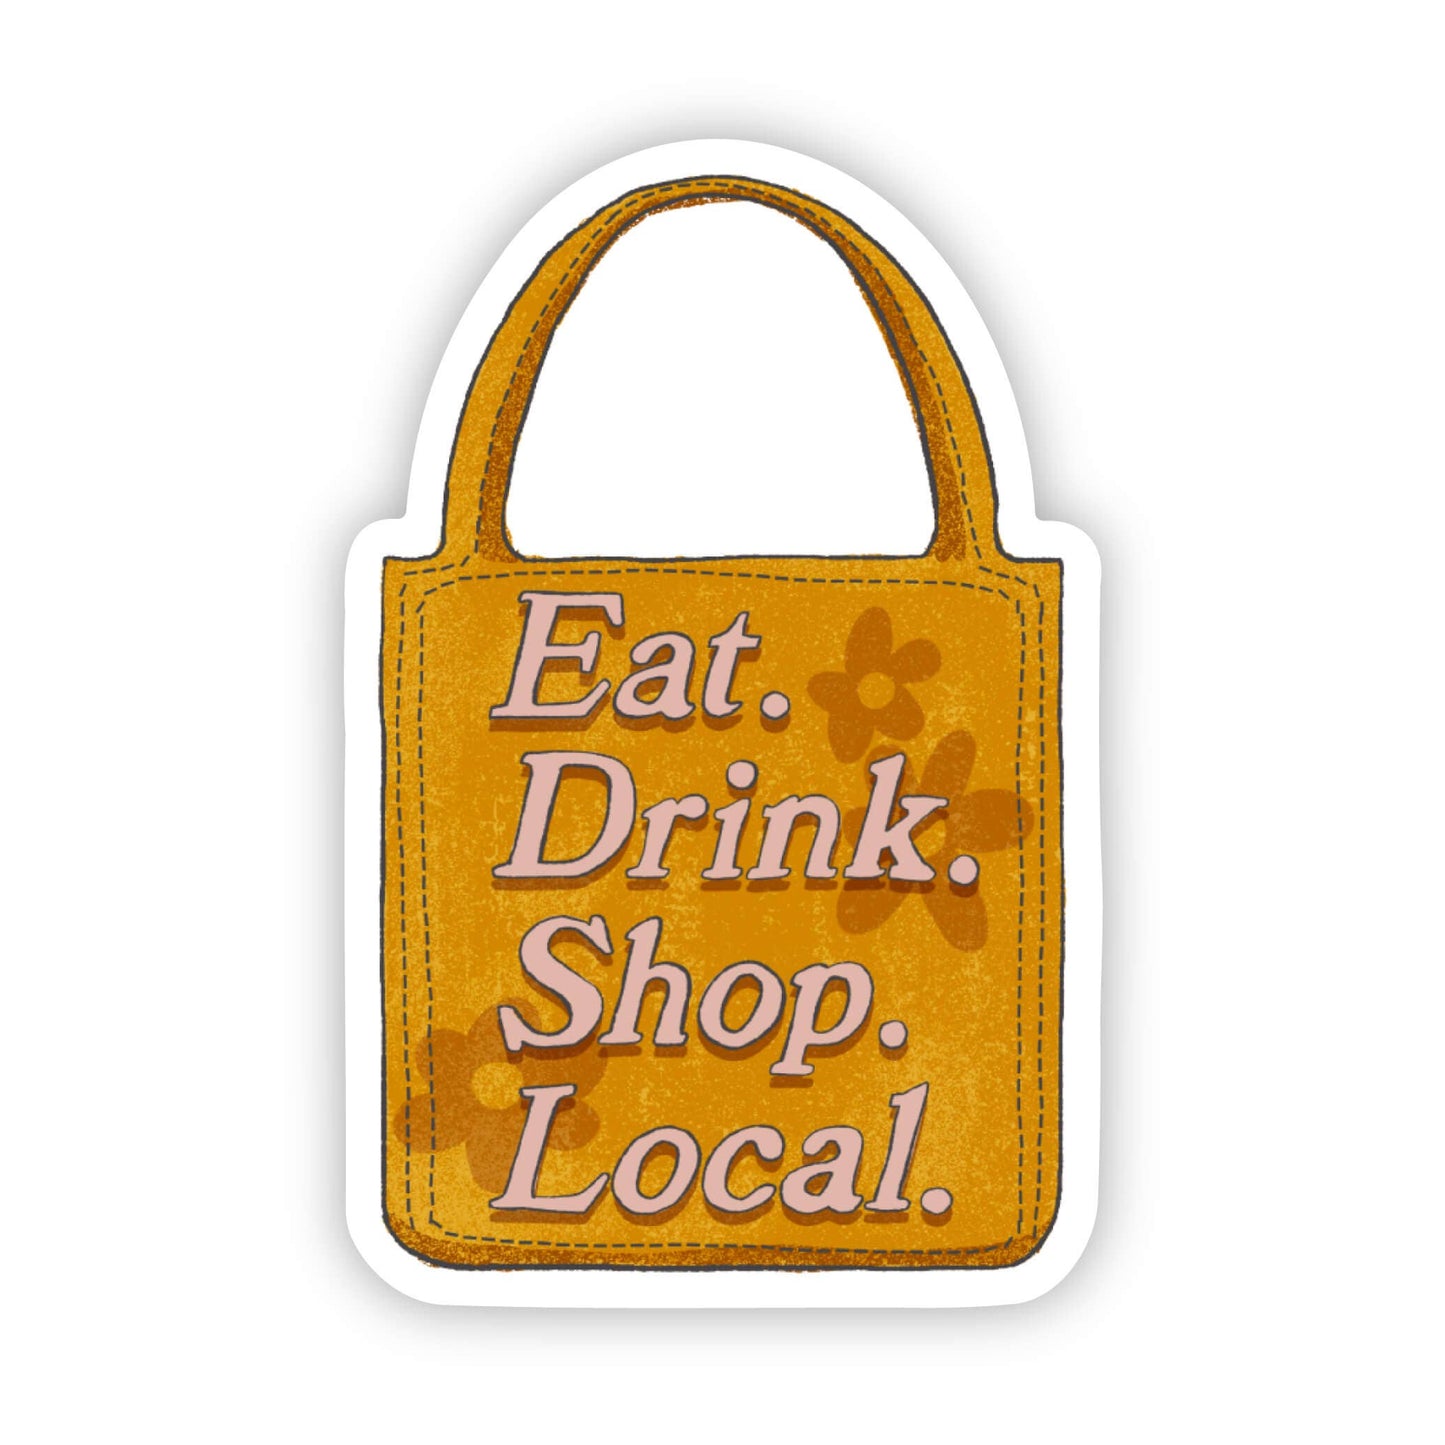 "Eat. Drink. Shop. Local." Bag Sticker